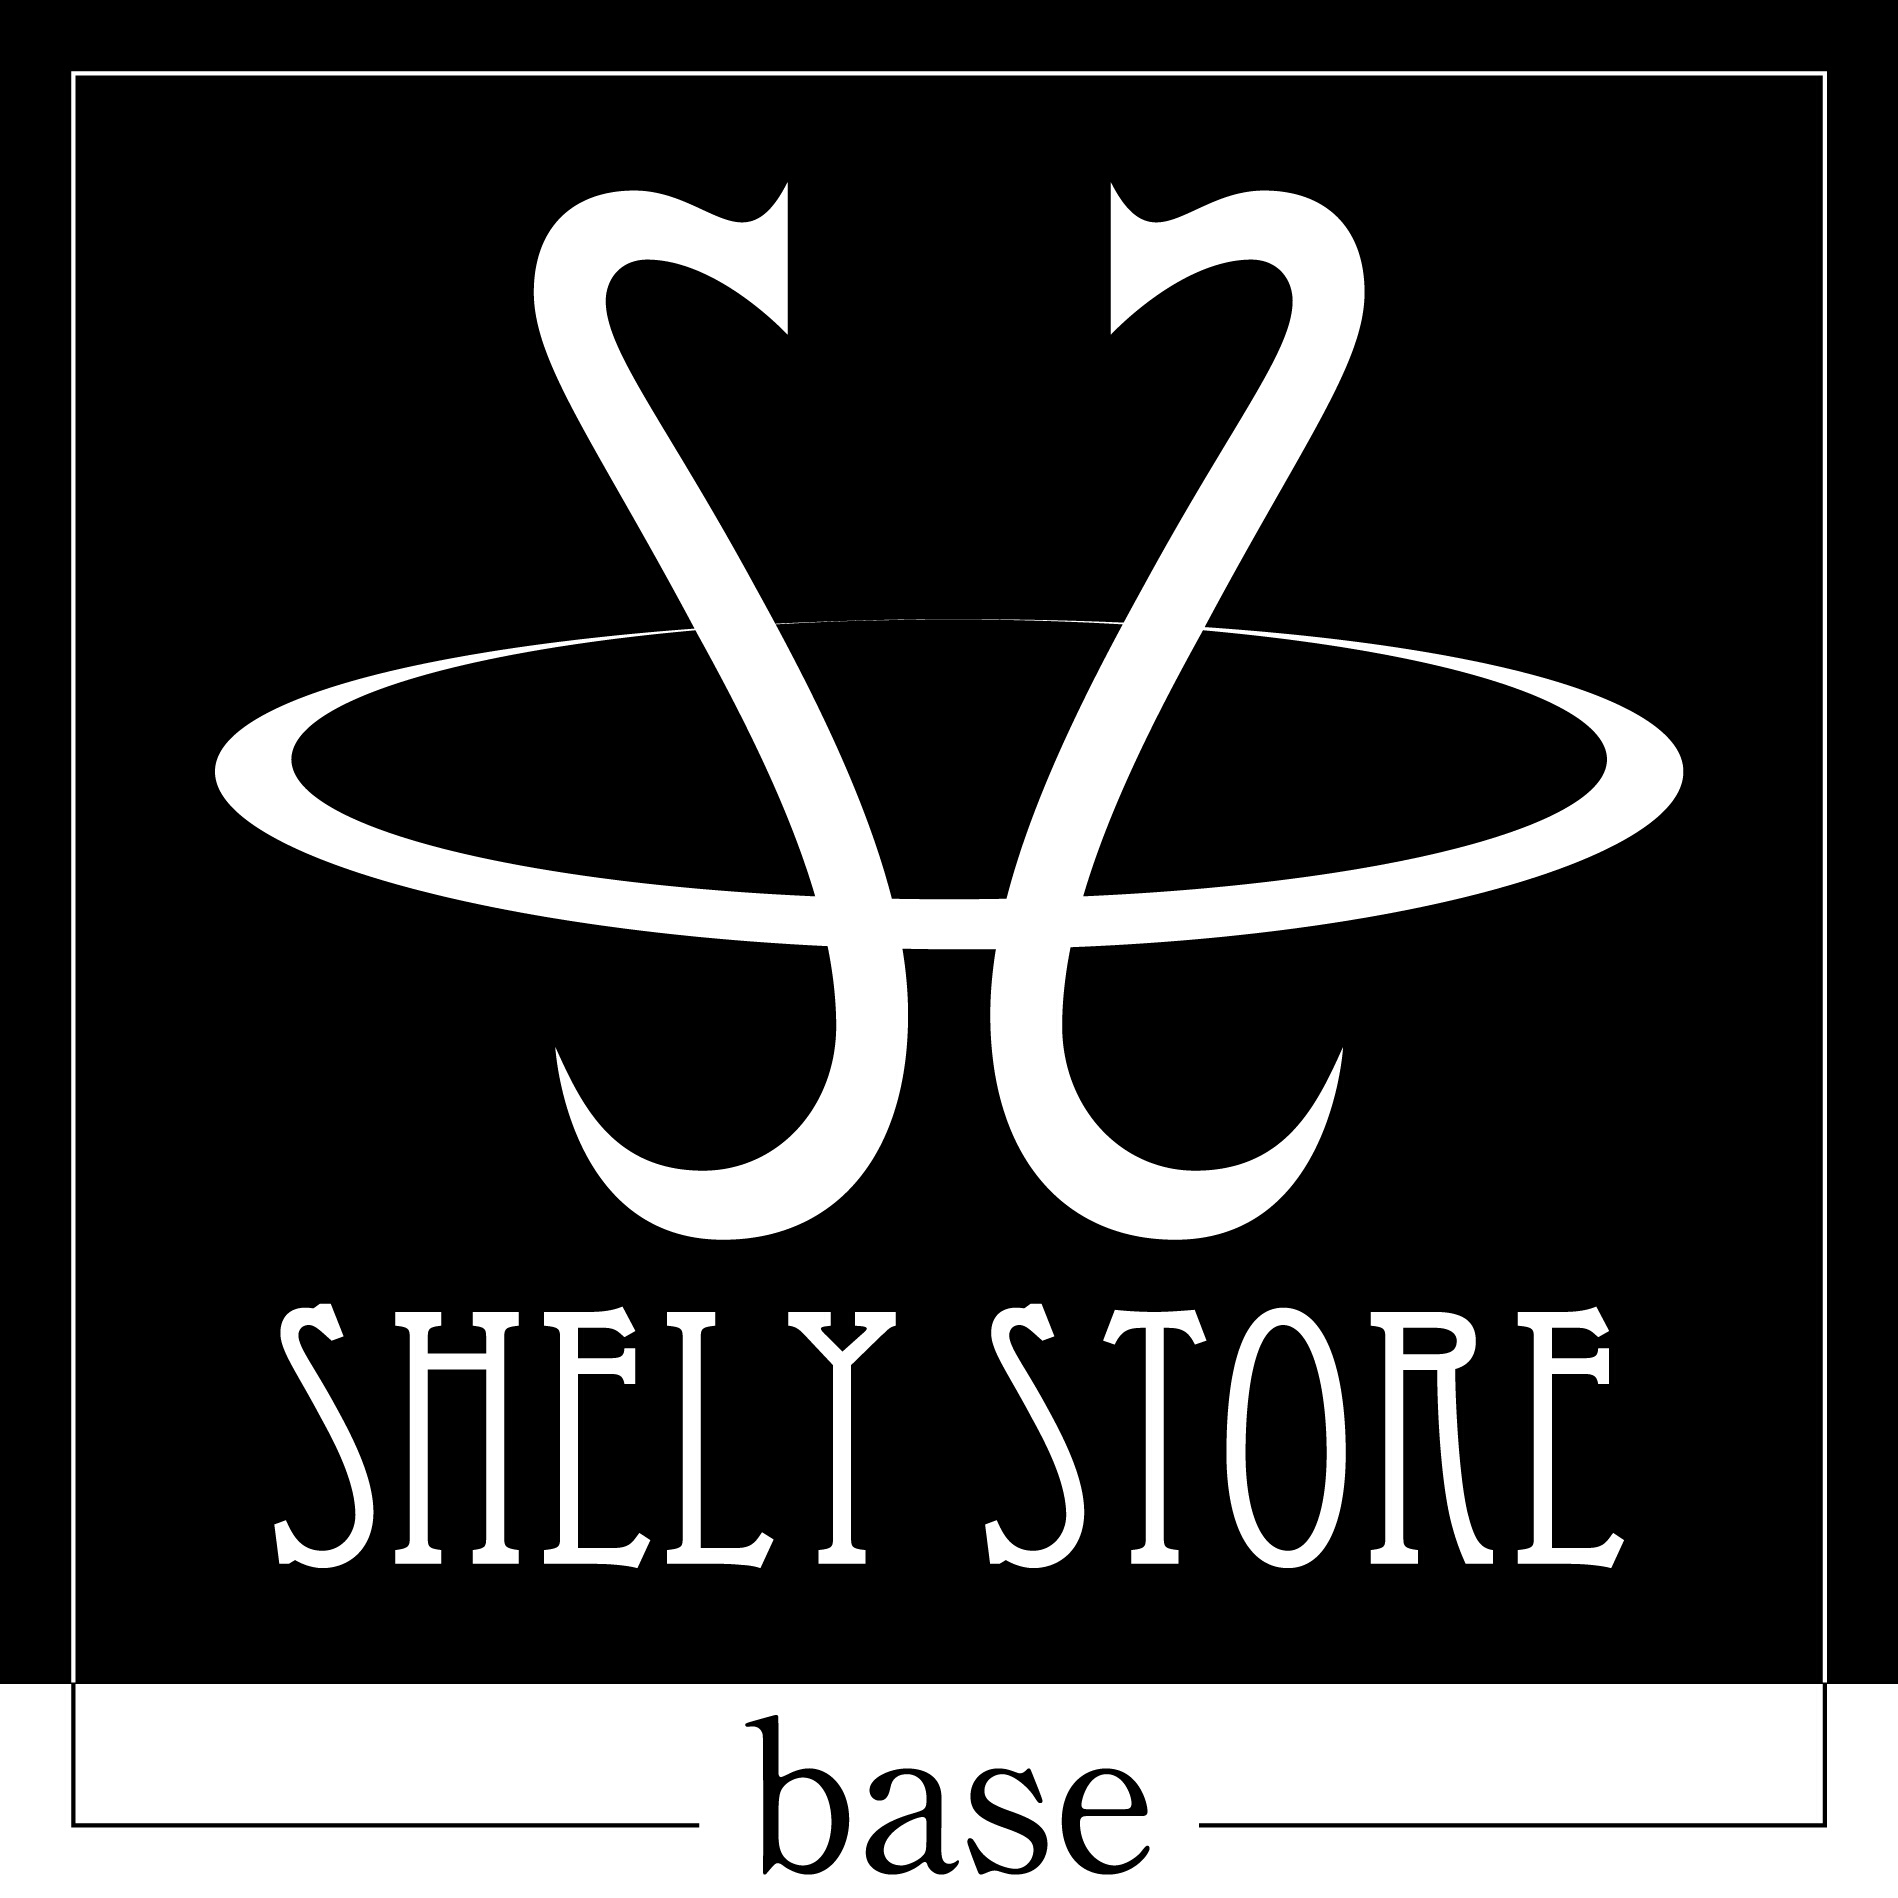 ShelyStore_base.jpg